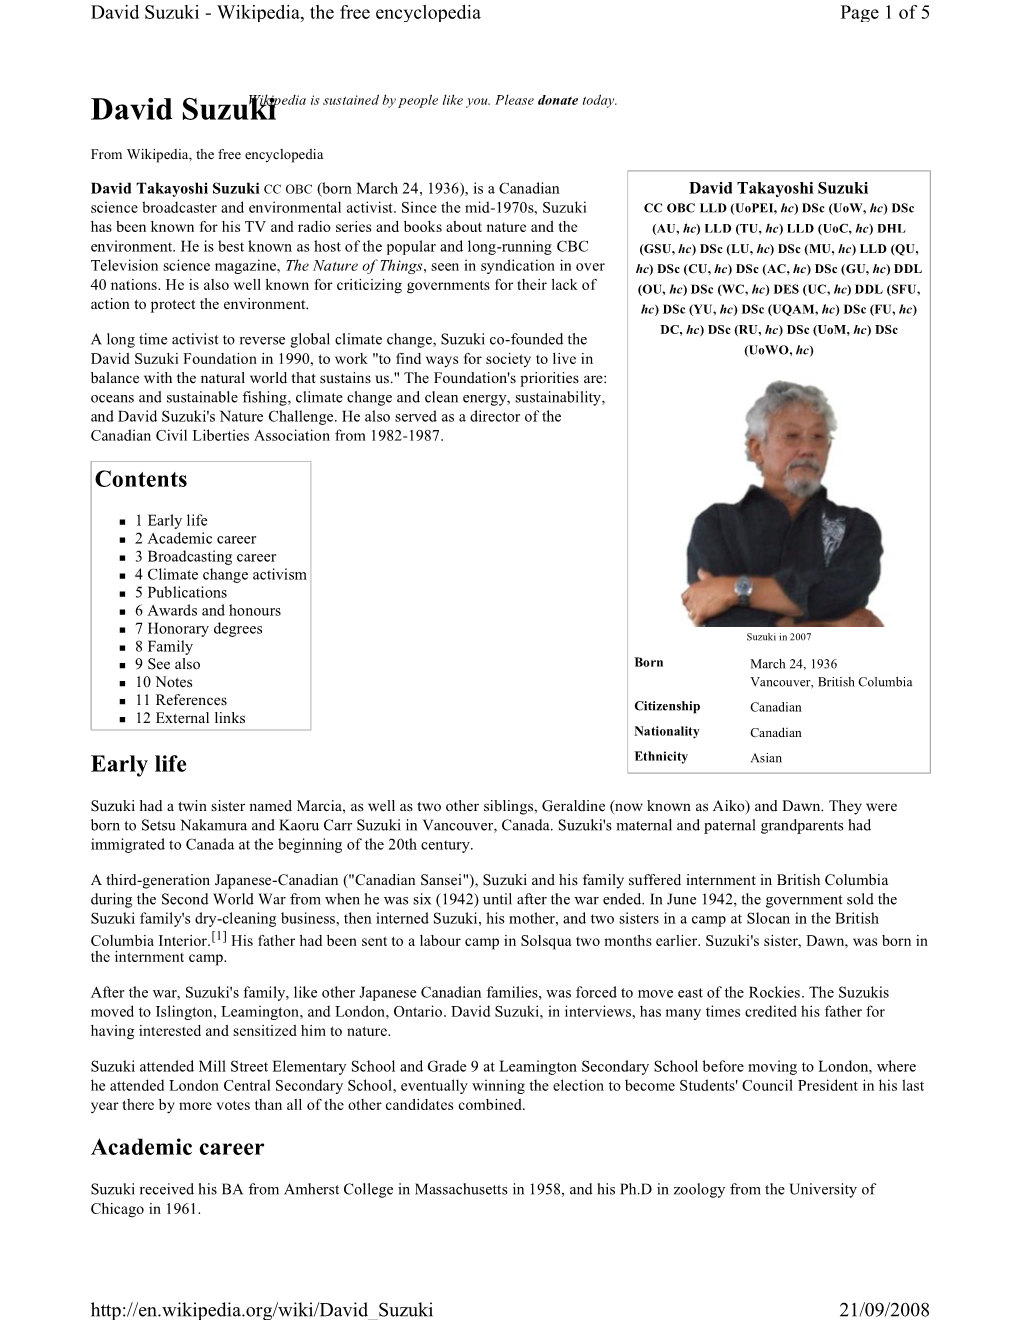 David Suzuki - Wikipedia, the Free Encyclopedia Page 1 of 5